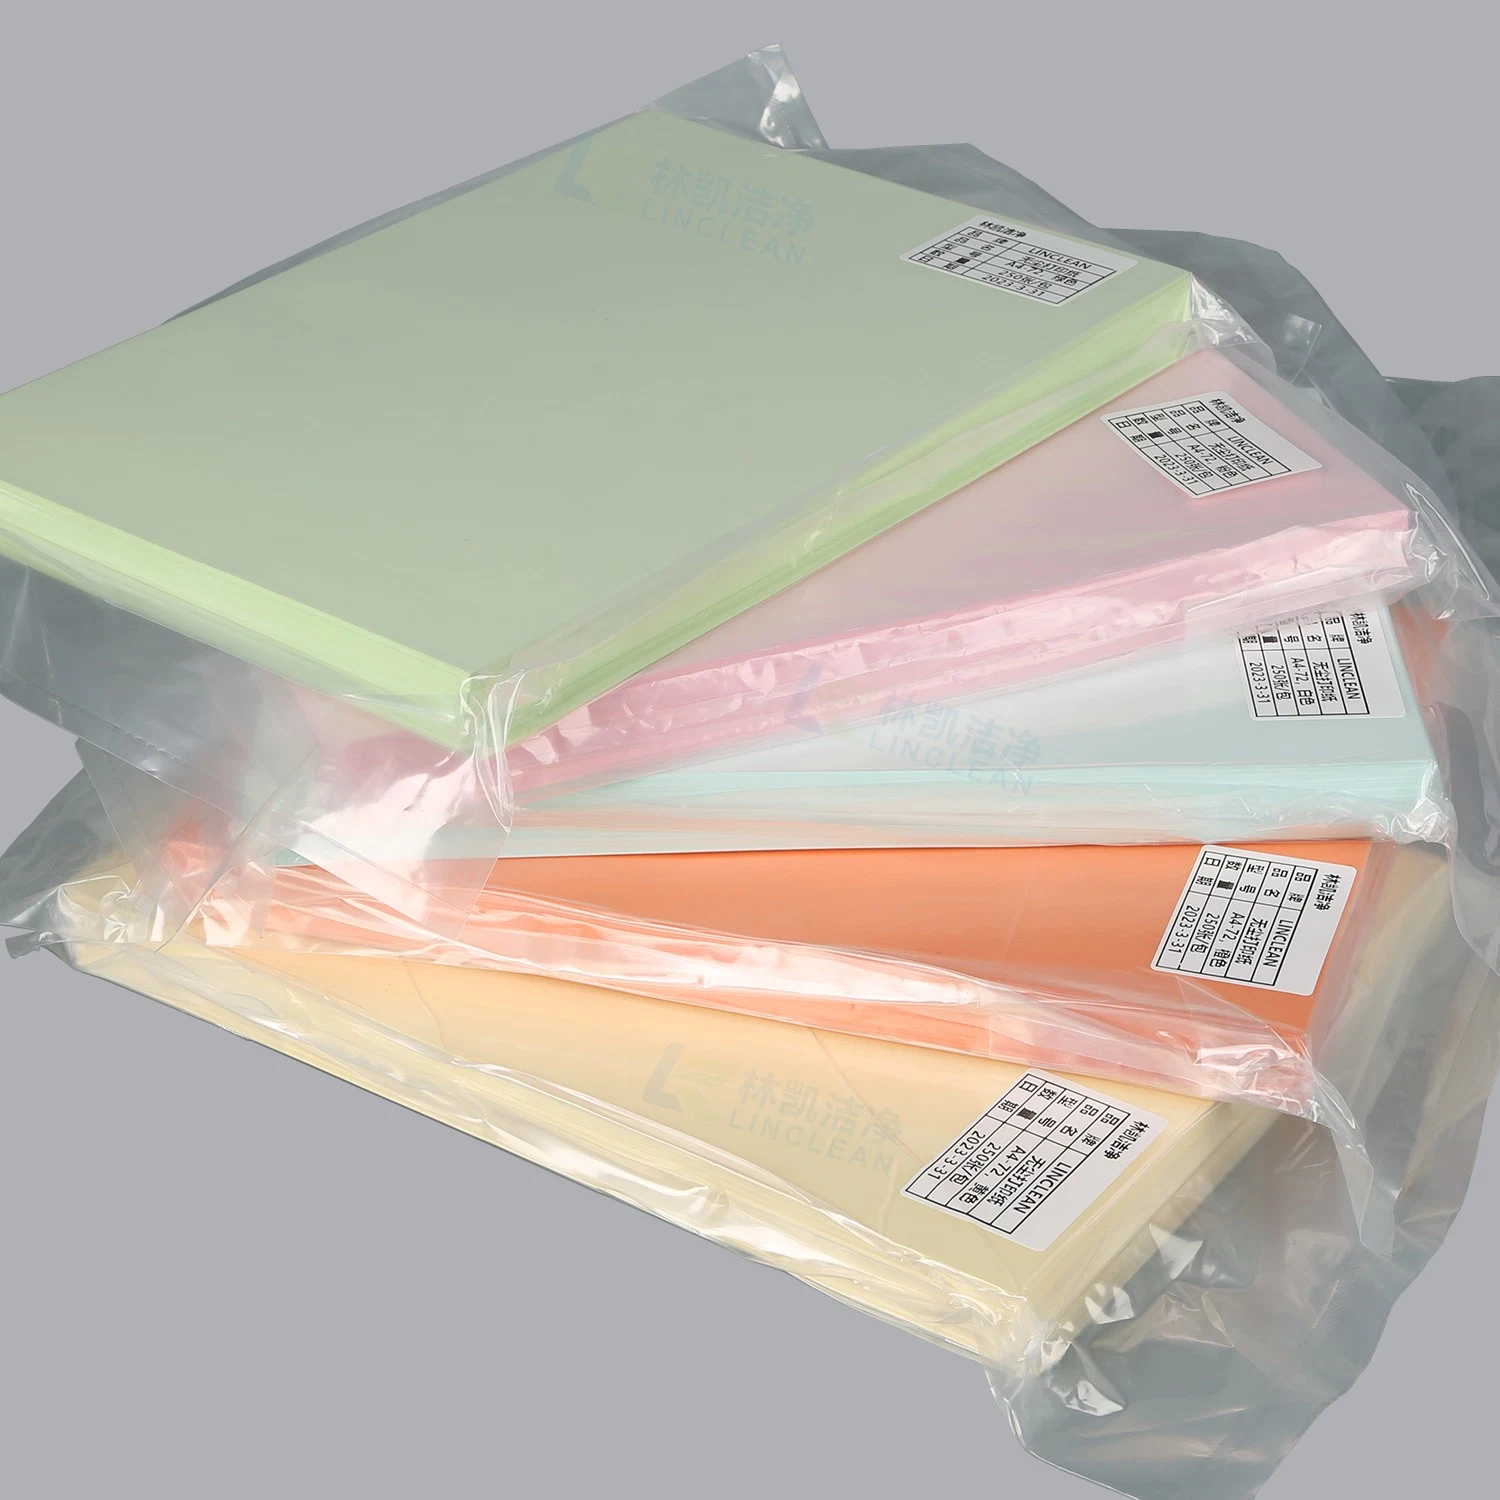 Farbenfrohes A4-Kopierpapier Office A4 A5 ESD-Kopierpapier Staubfreies, Antistatisches Reinraumpapier Für Den Industriedruck